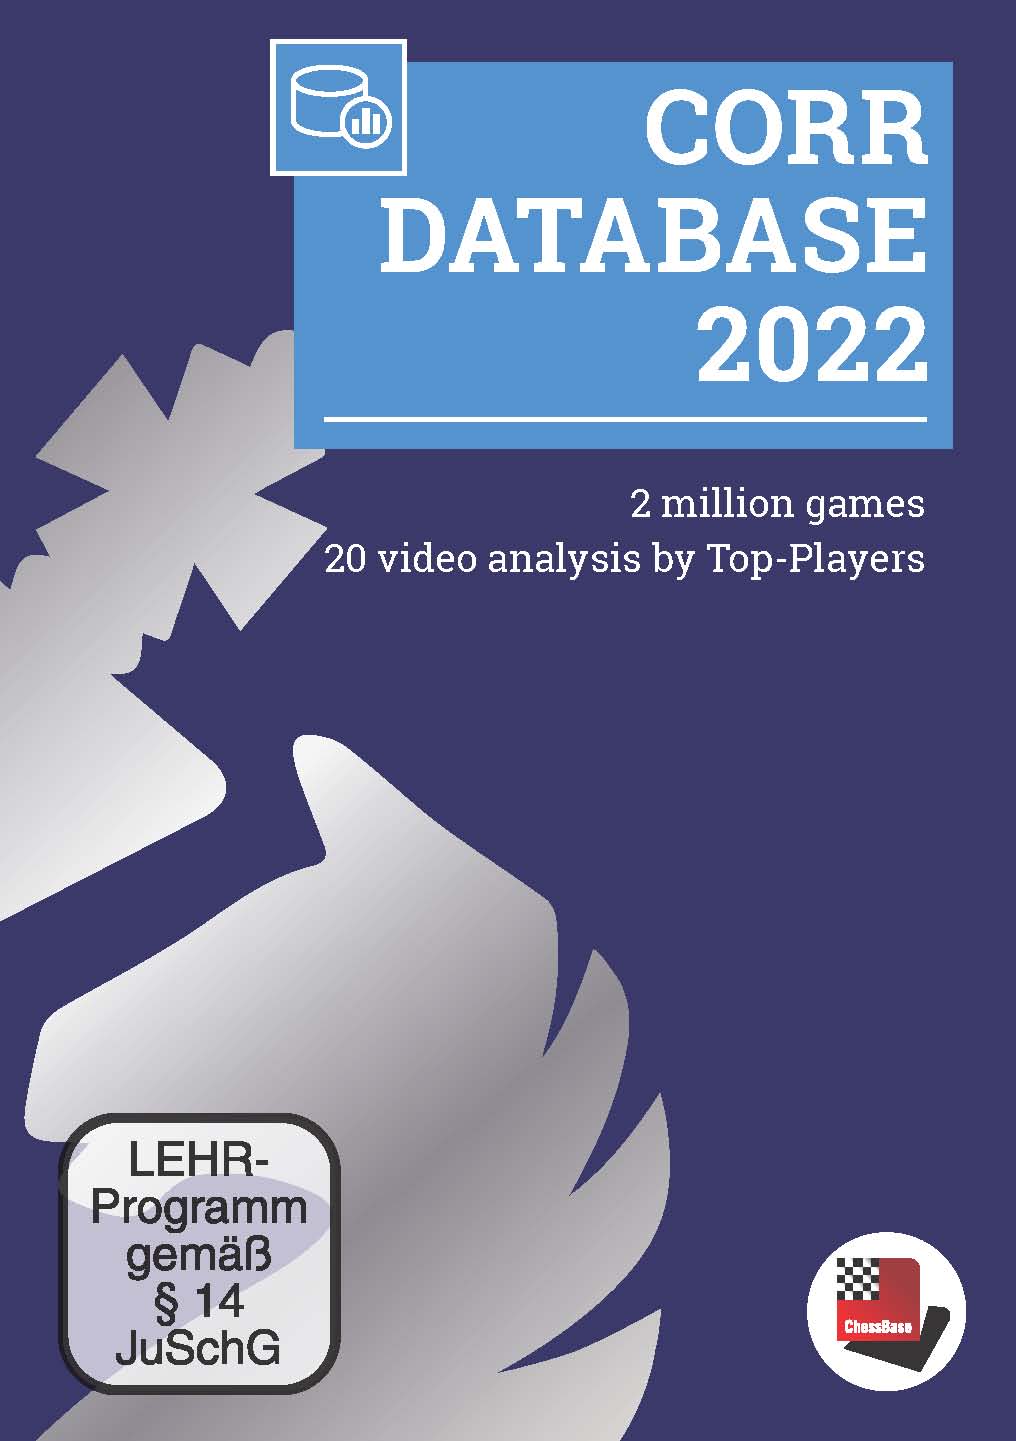 Corr Database 2022 Upgrade von Corr Database 2020